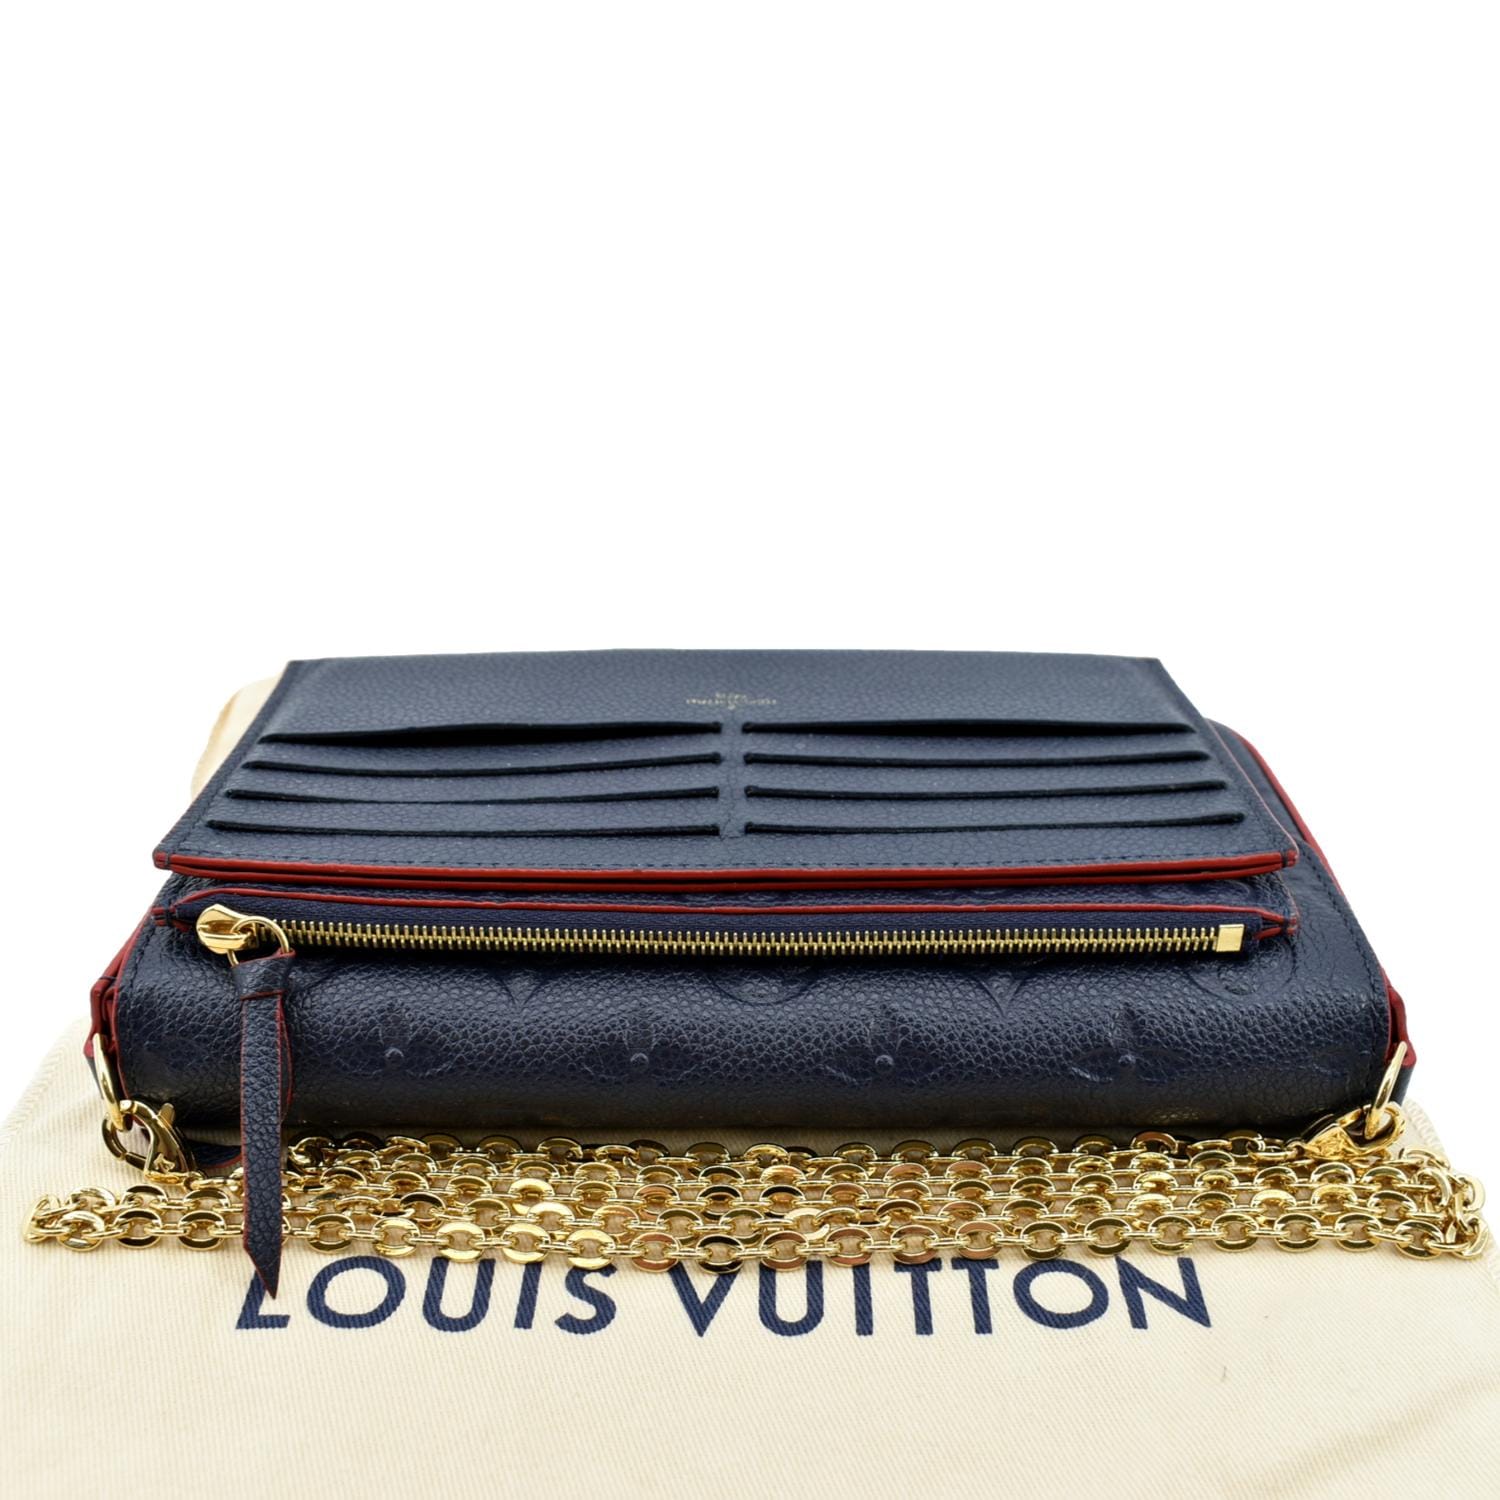 Louis Vuitton Double zip pochette marine rouge navy red crossbody